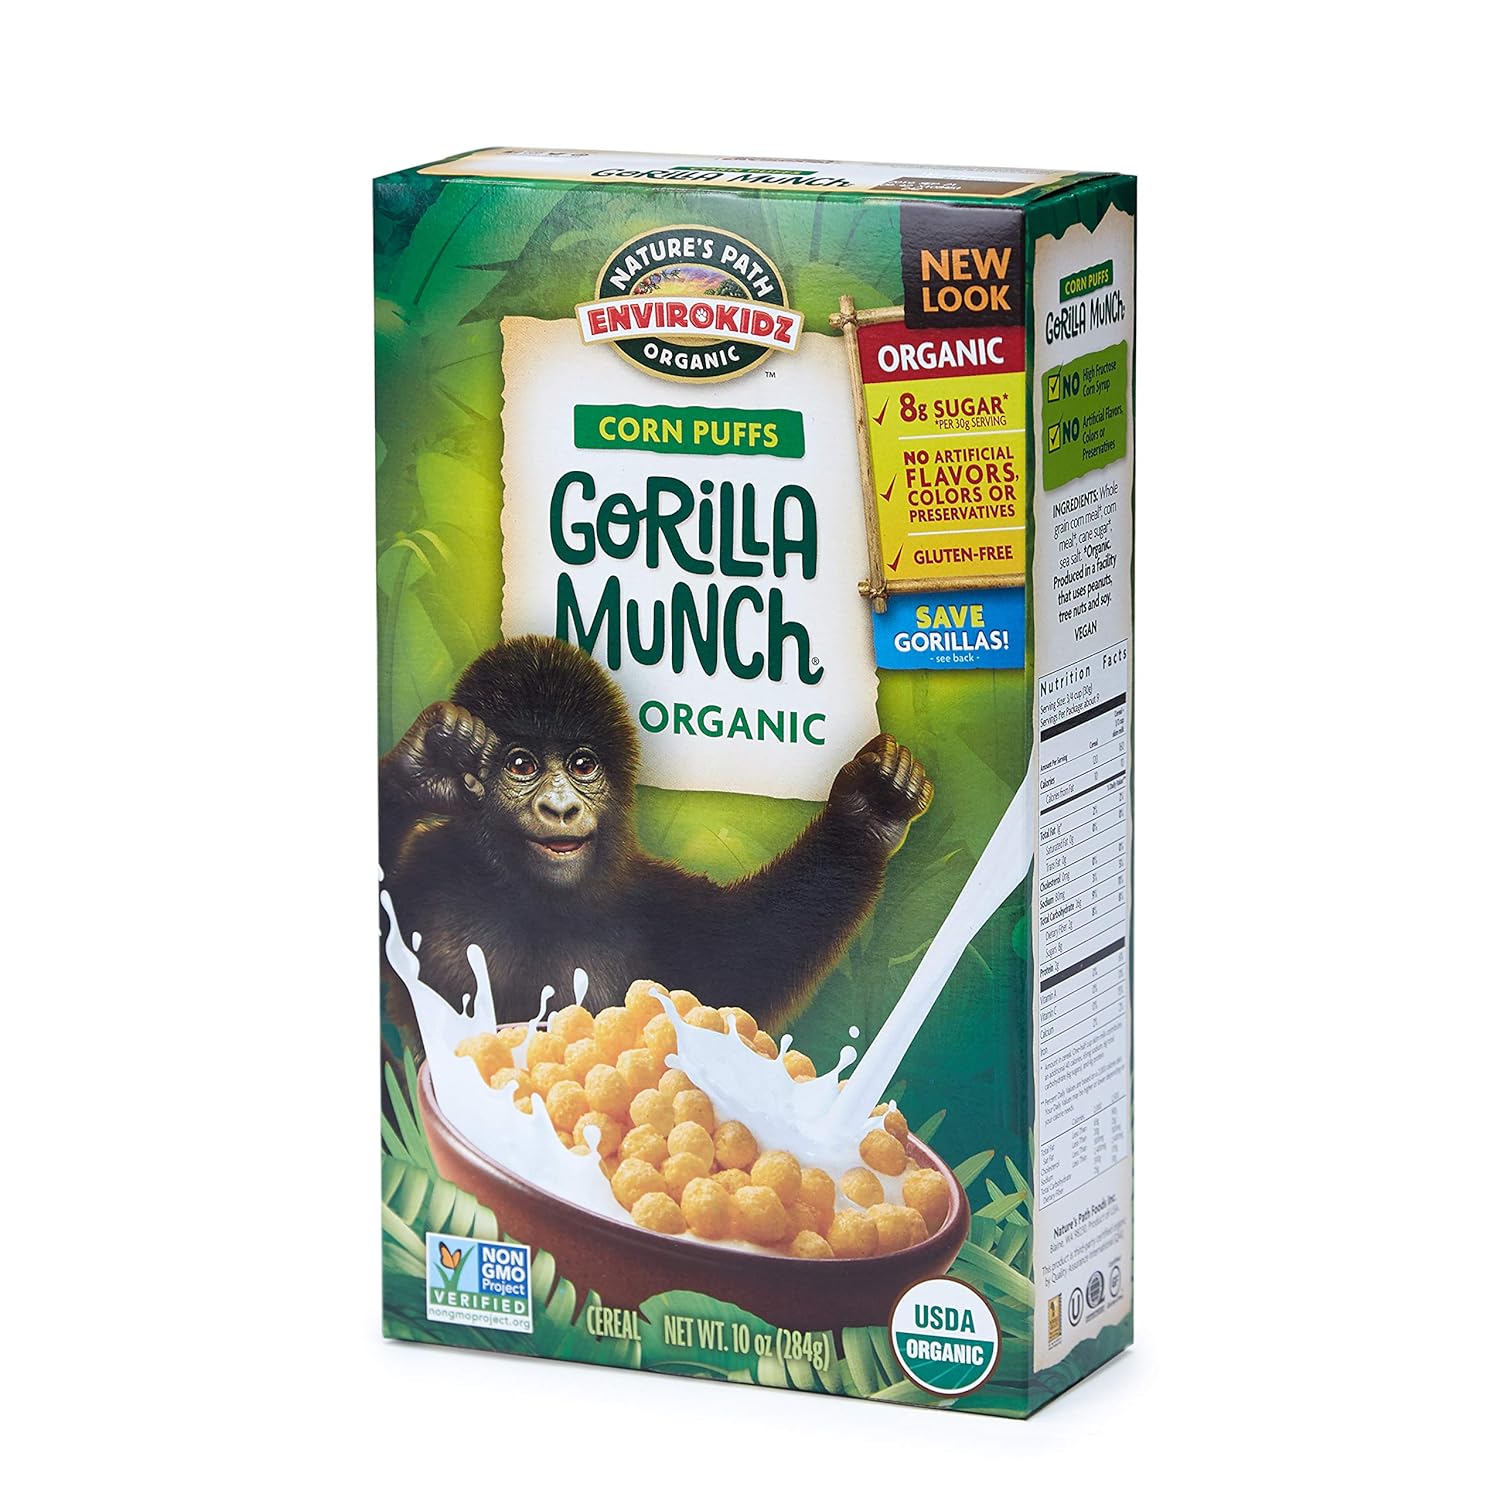 EnviroKidz Gorilla Munch Organic Corn Puffs Cereal, 10 Ounce (Pack of 6), Gluten Free, Non-GMO, EnviroKidz by Nature's Path